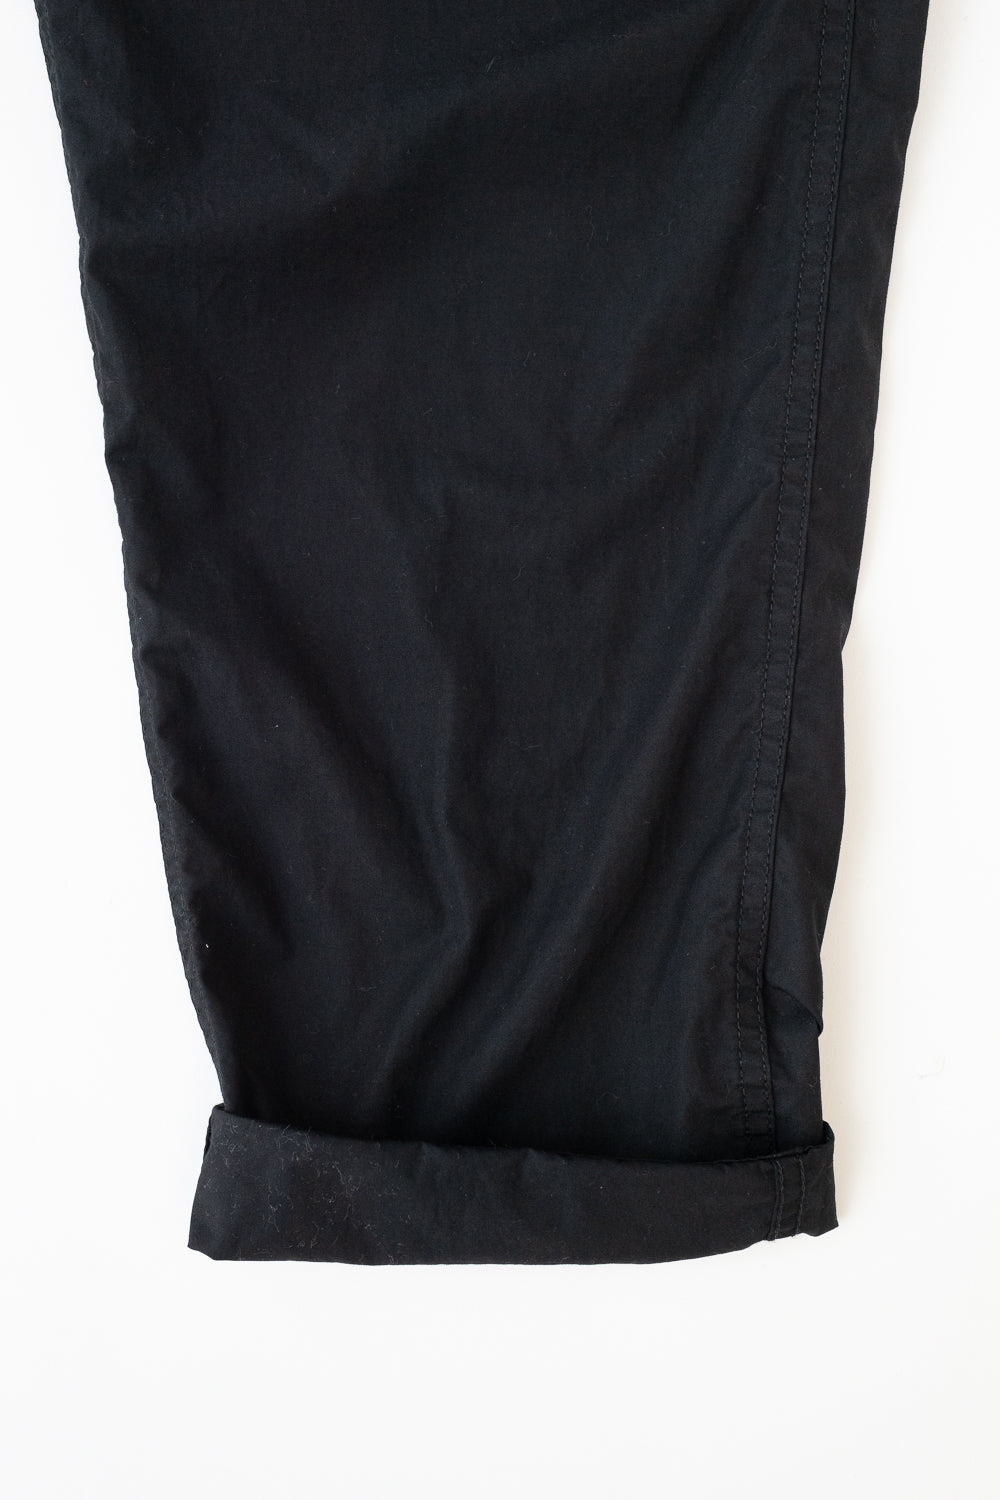 03-1002-61 - New Yorker Pant Typewriter Cloth - Black